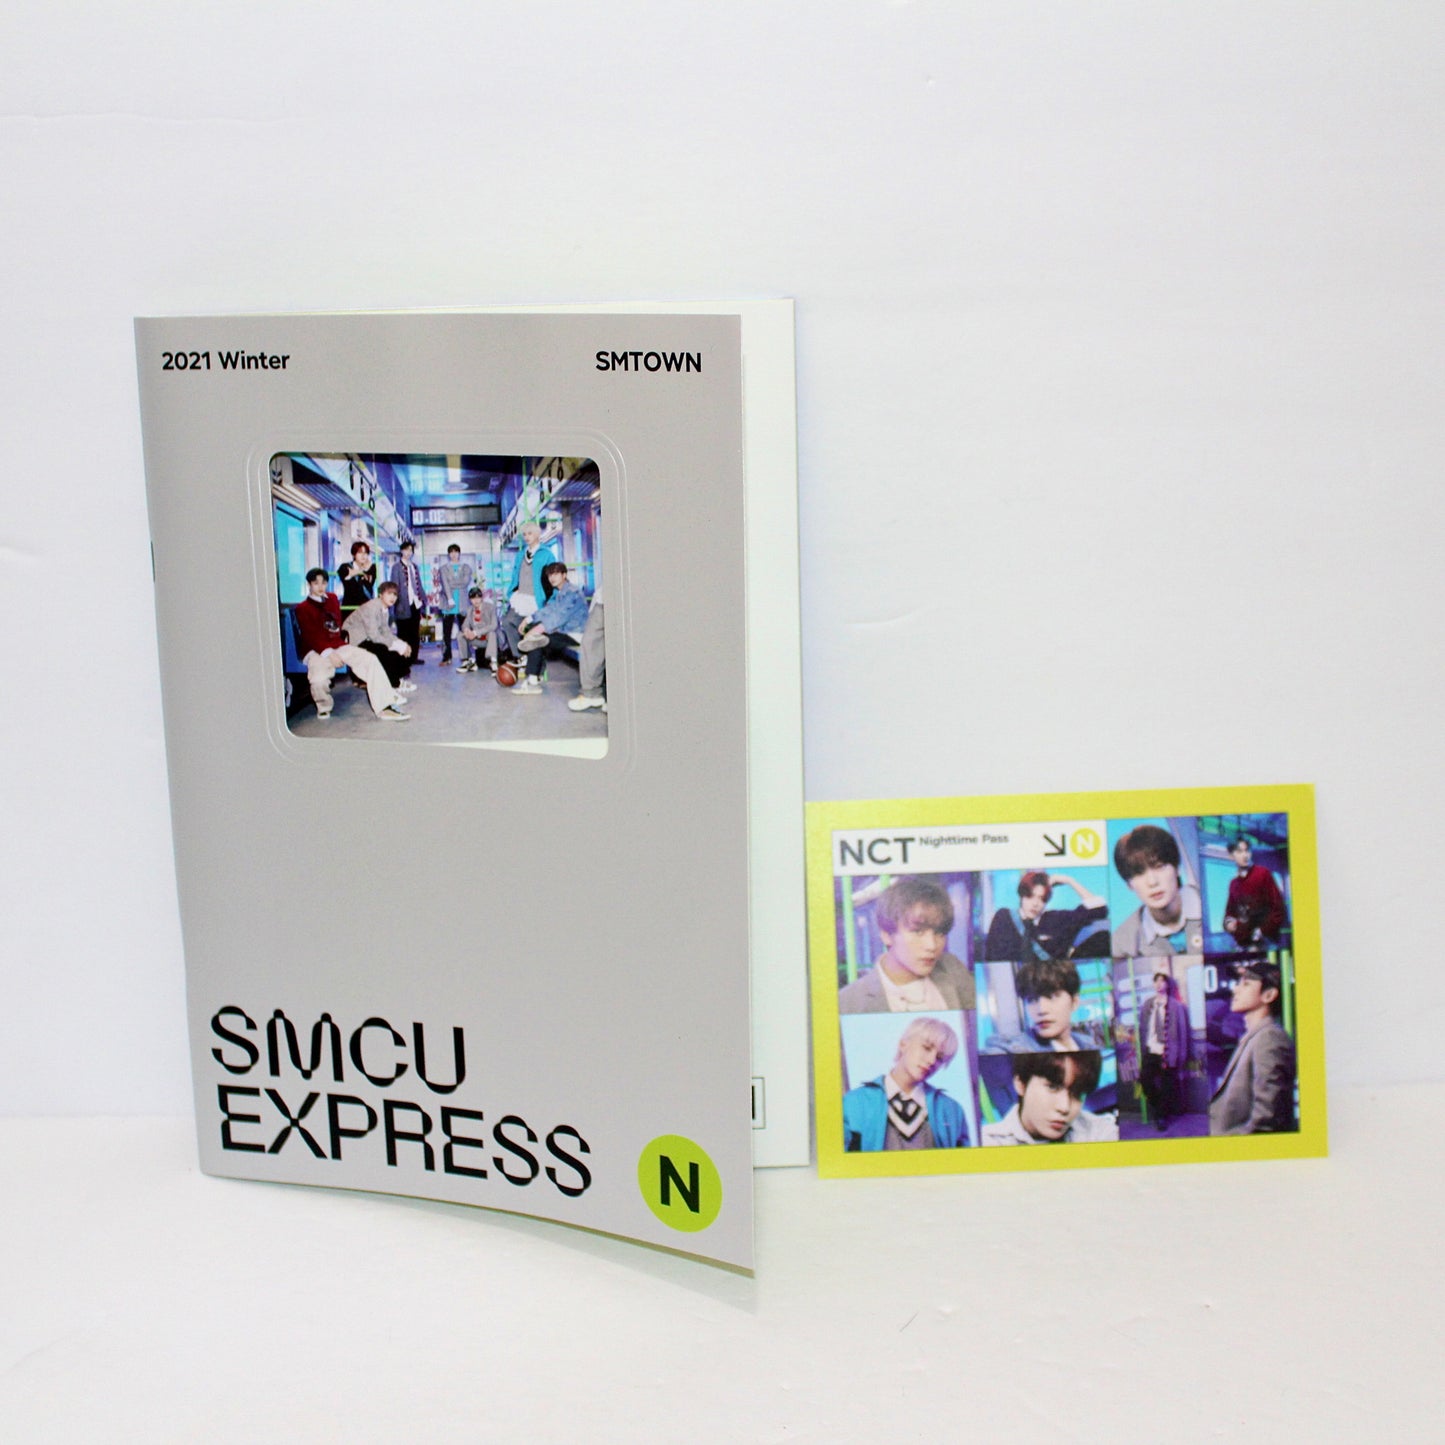 2021 Winter SMTOWN: SMCU Express | NCT - Nighttime Pass